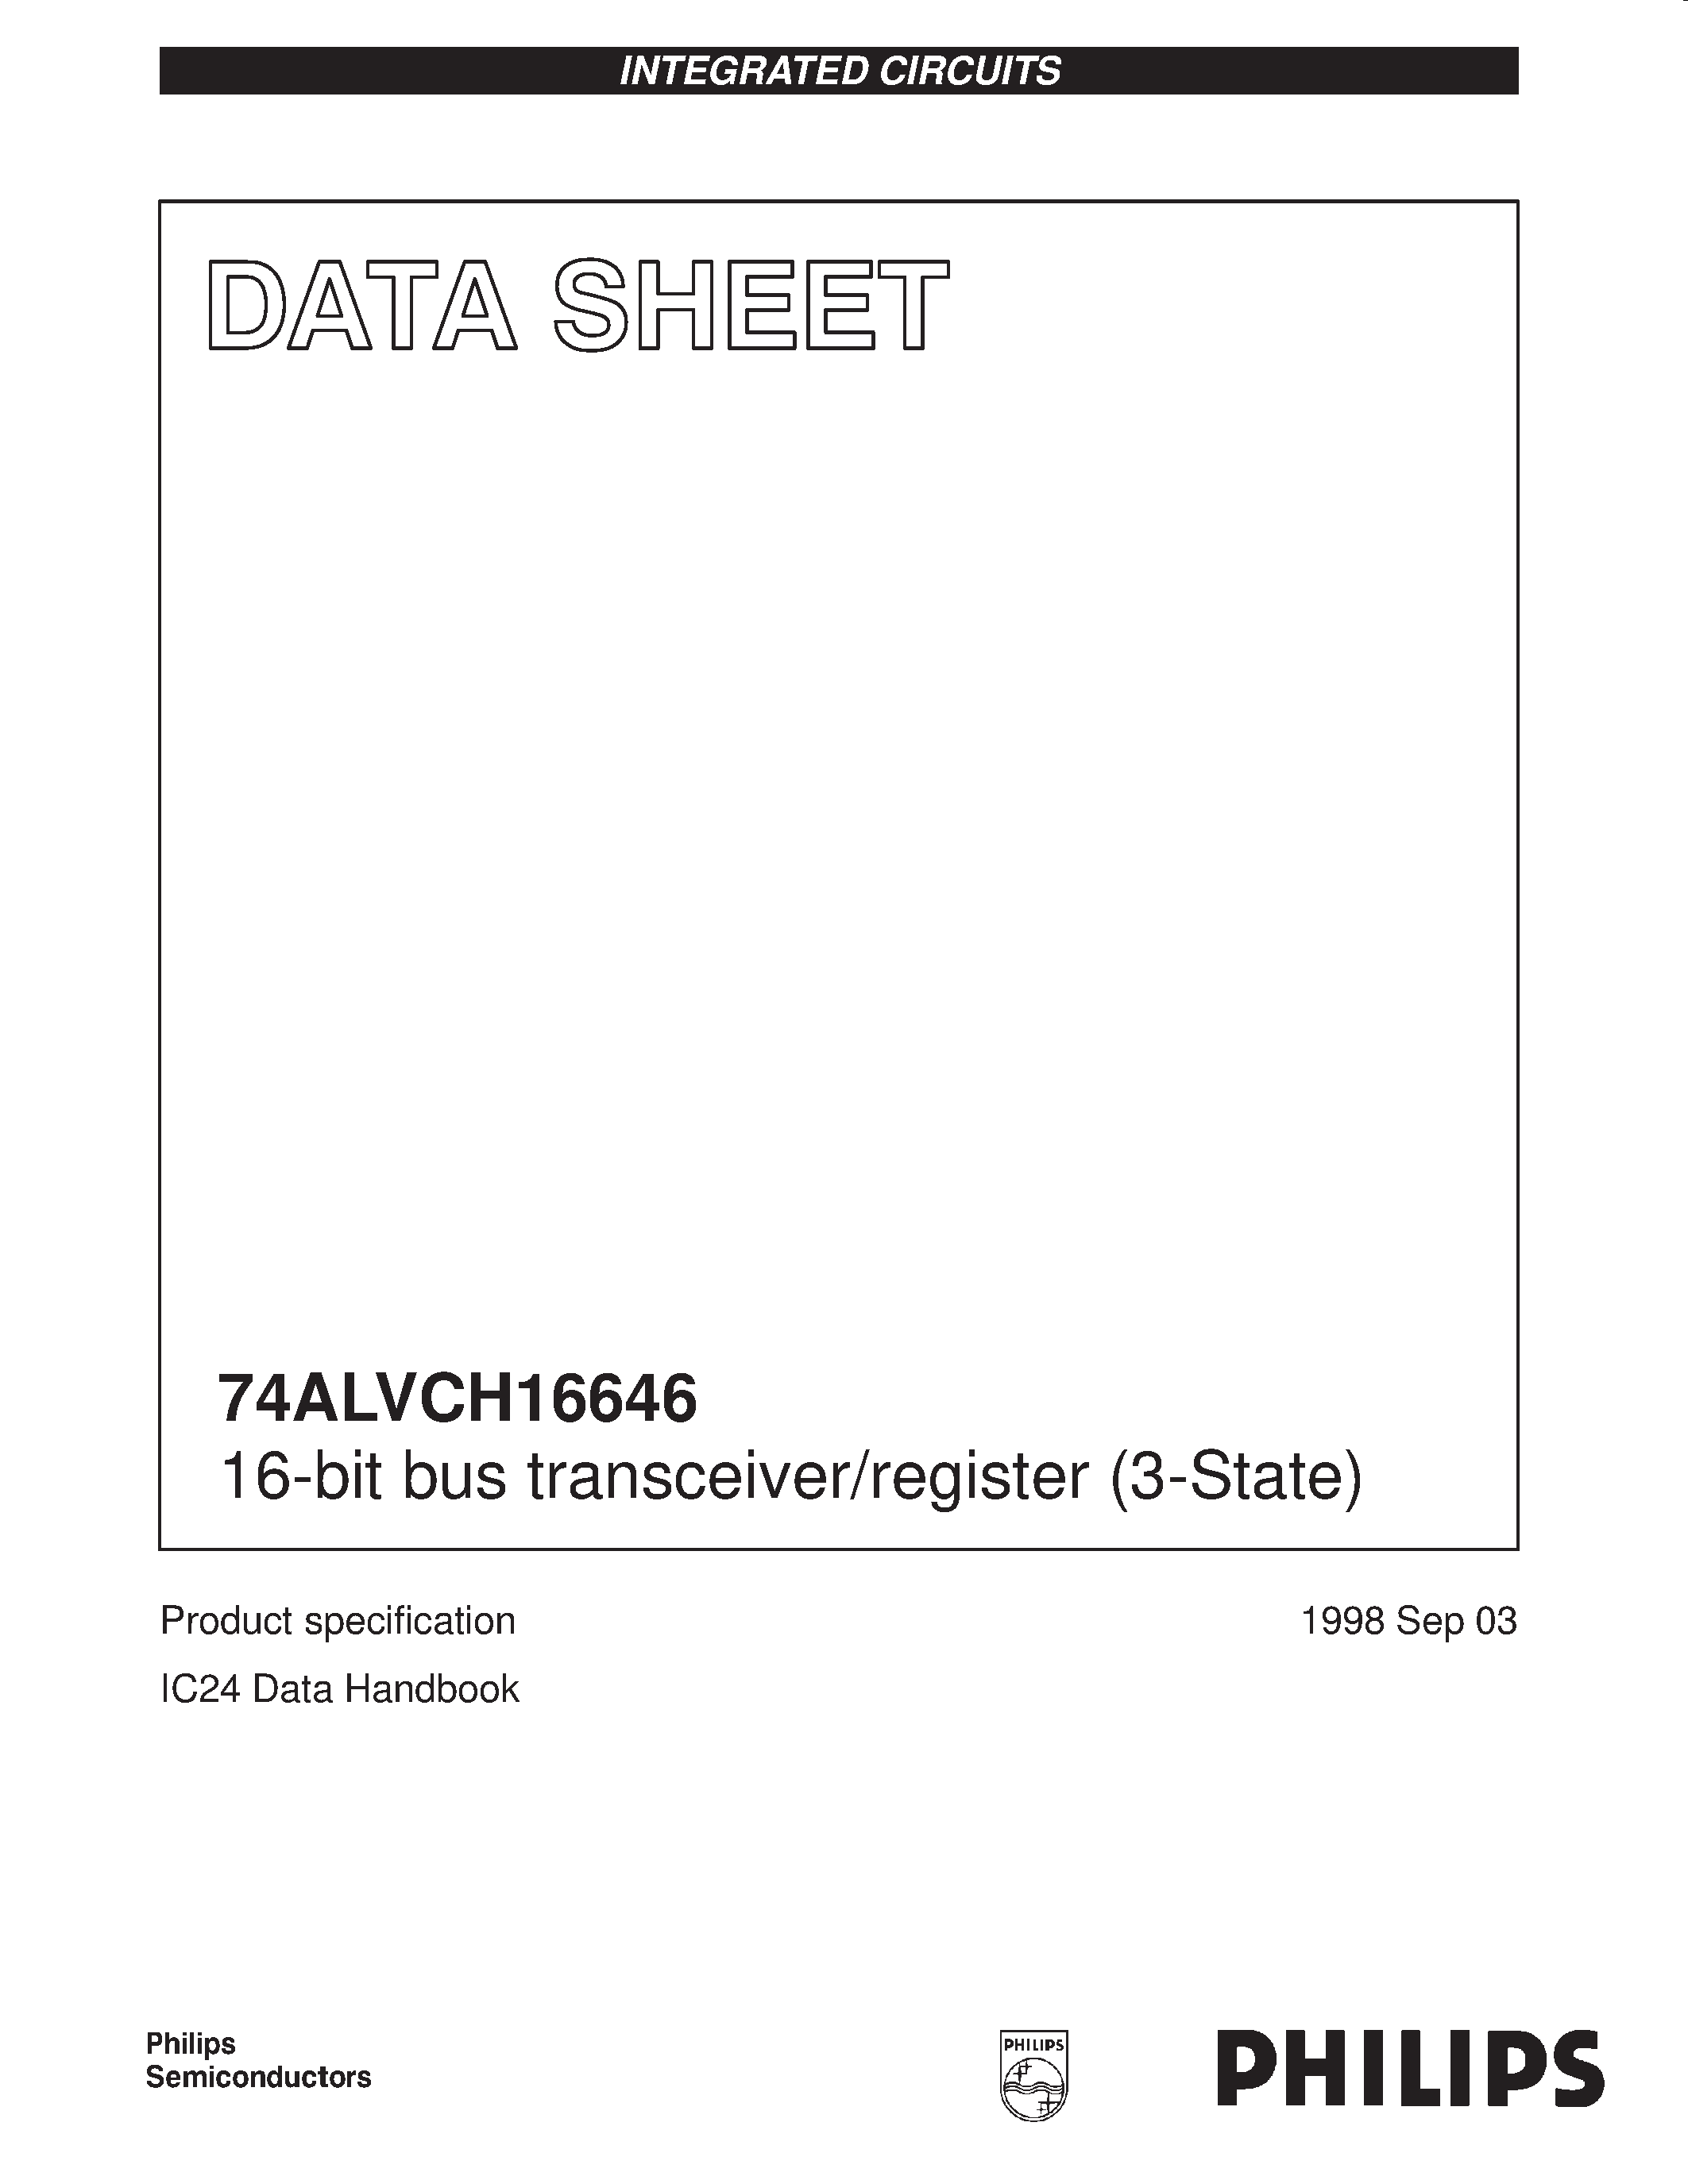 Даташит 74ALVCH16646DGG - 16-bit bus transceiver/register 3-State страница 1